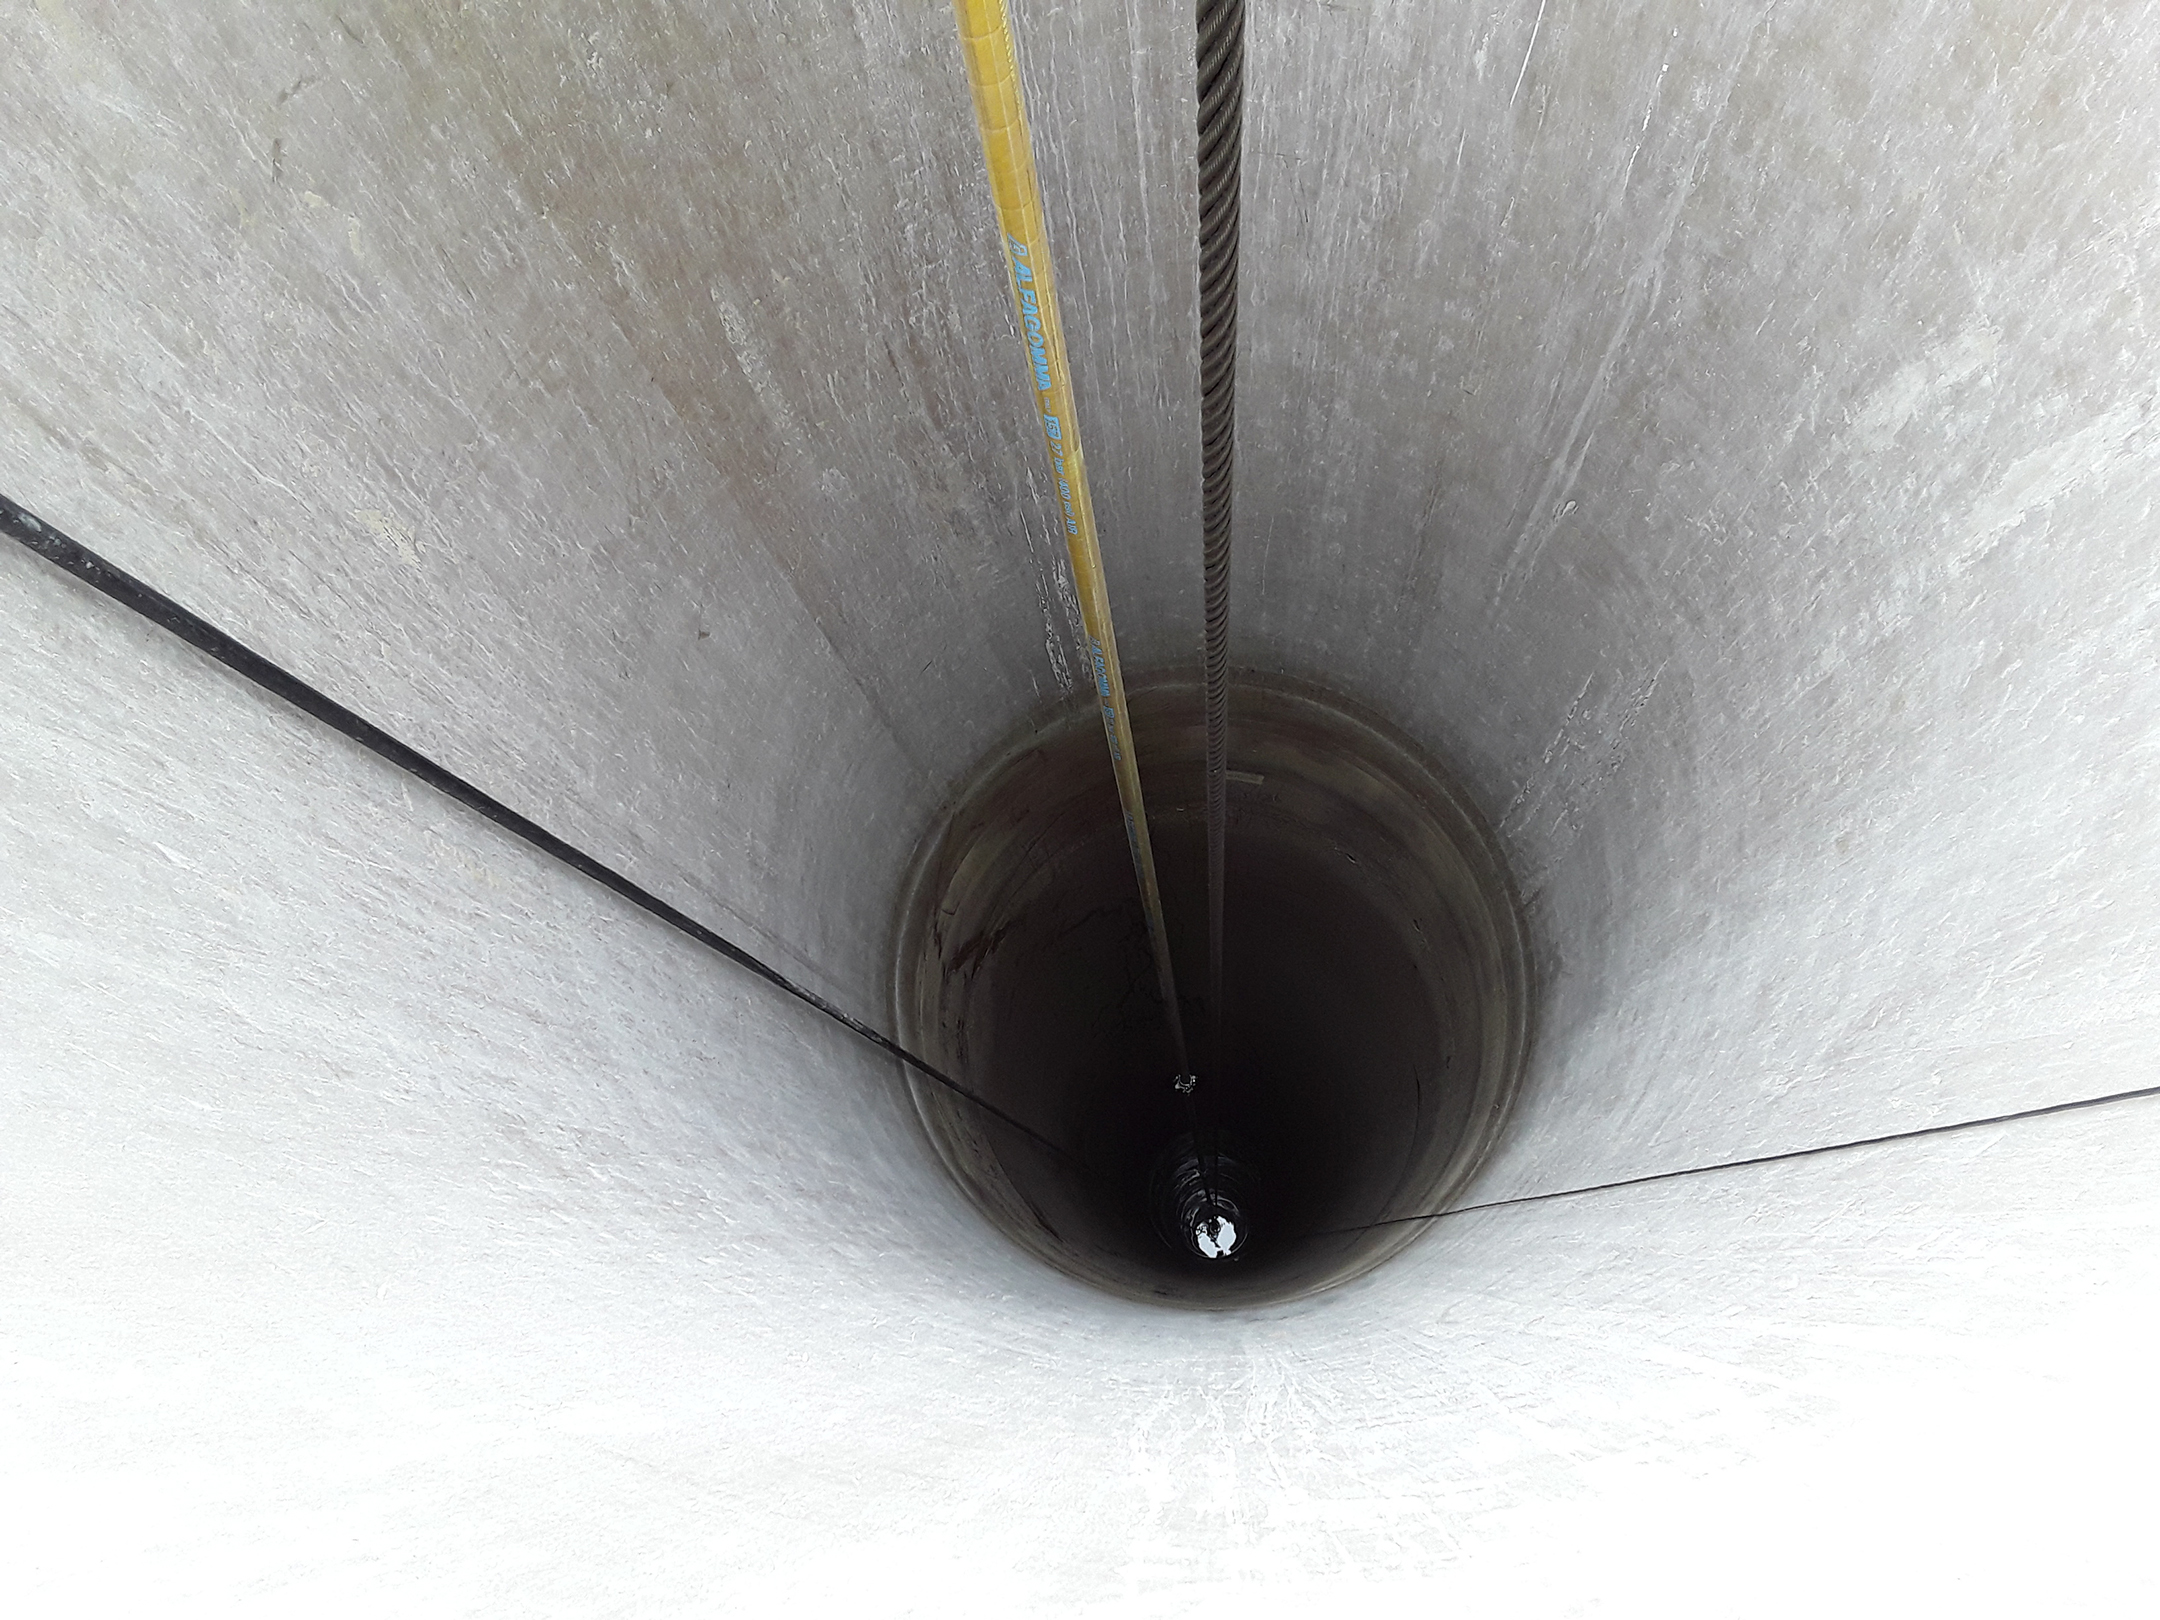 June 17 ds9 shaft water